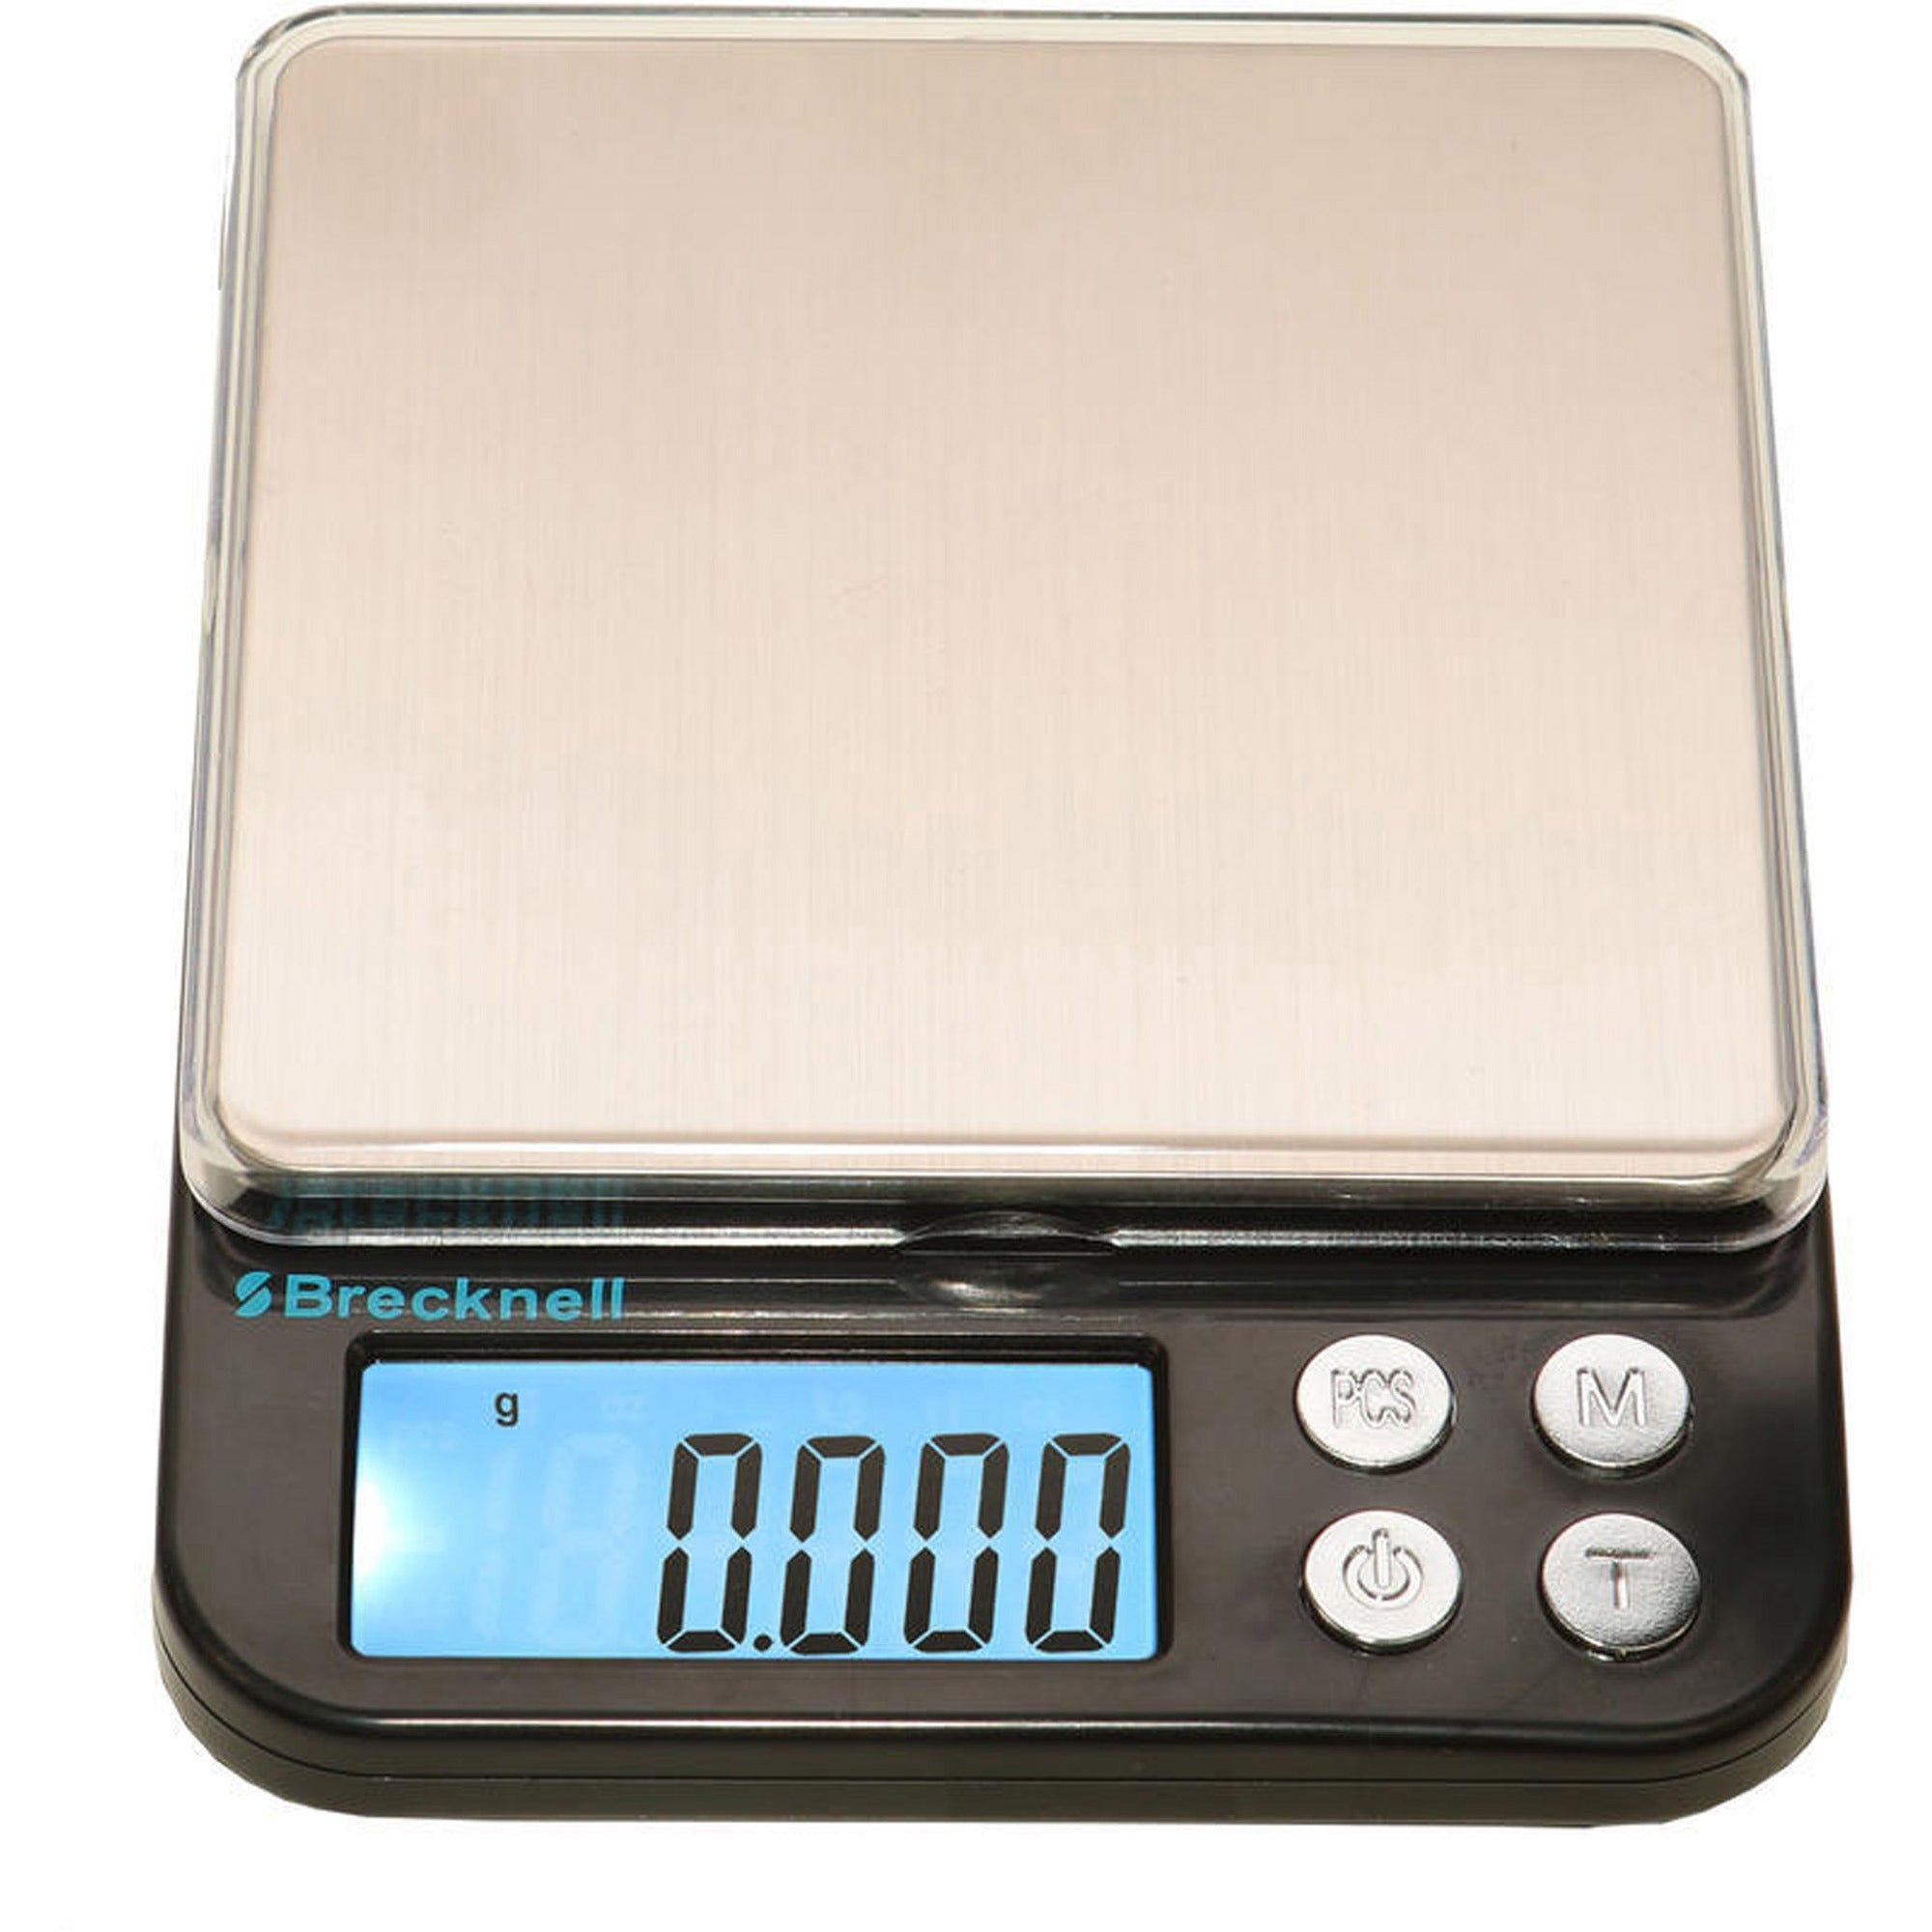 brecknell-epb500-epb-series-balance-scale-500-g-maximum-weight-capacity-black-silver_sbwepb500 - 1